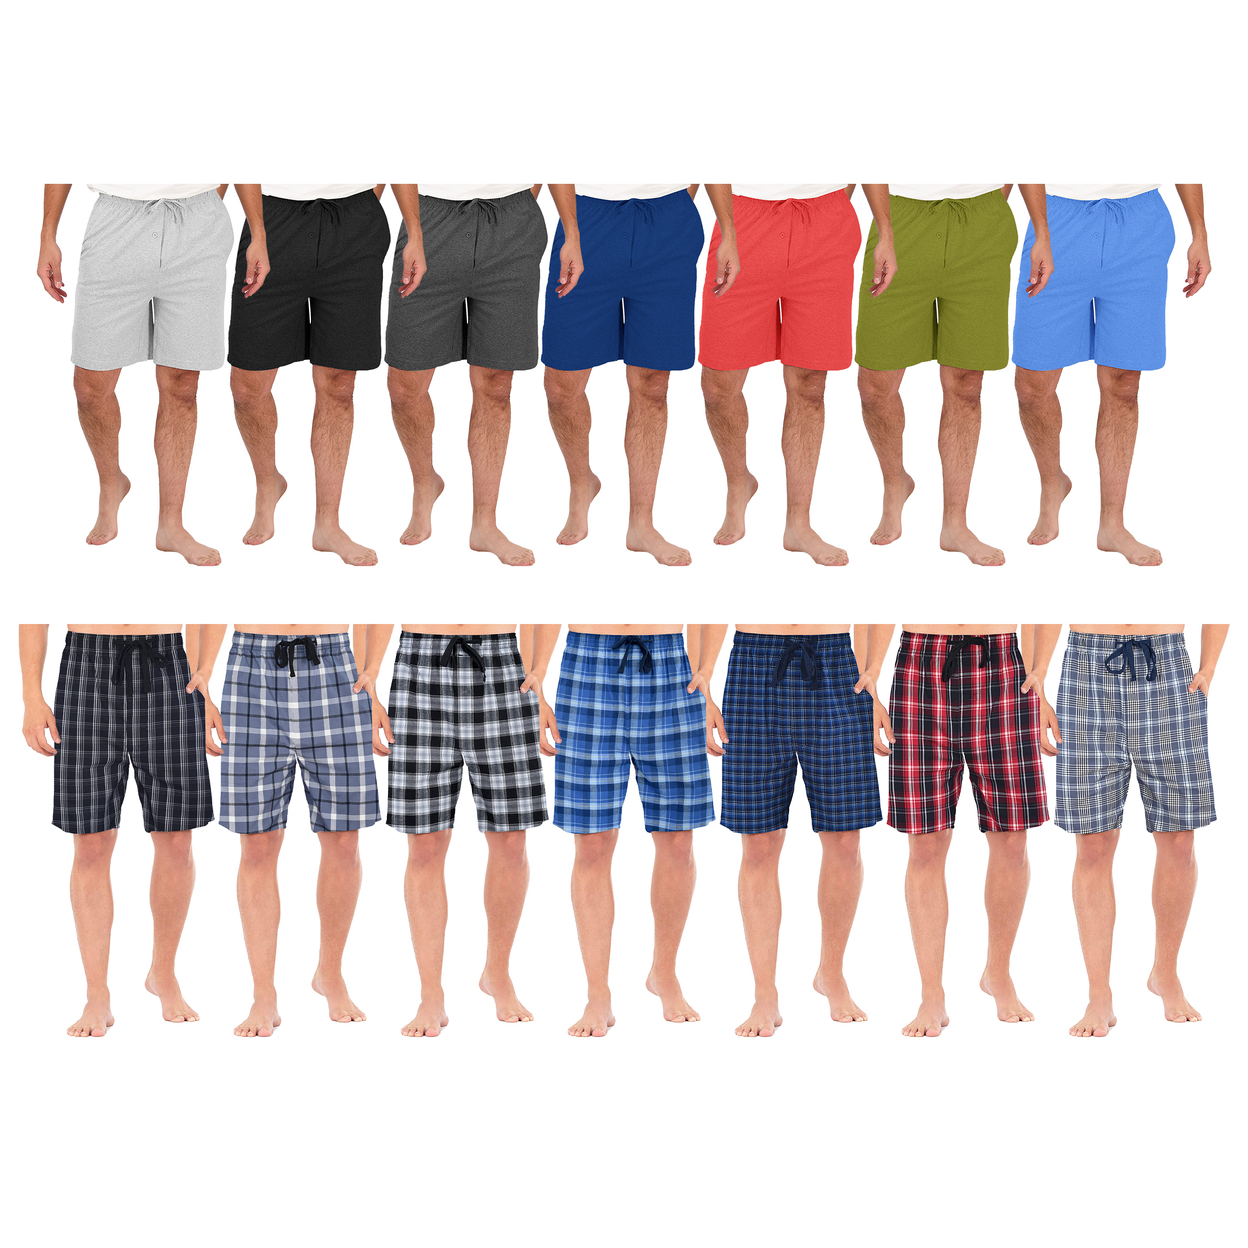 Men's Ultra-Soft Knit Lounge Pajama Sleep Shorts - Plaid, Medium